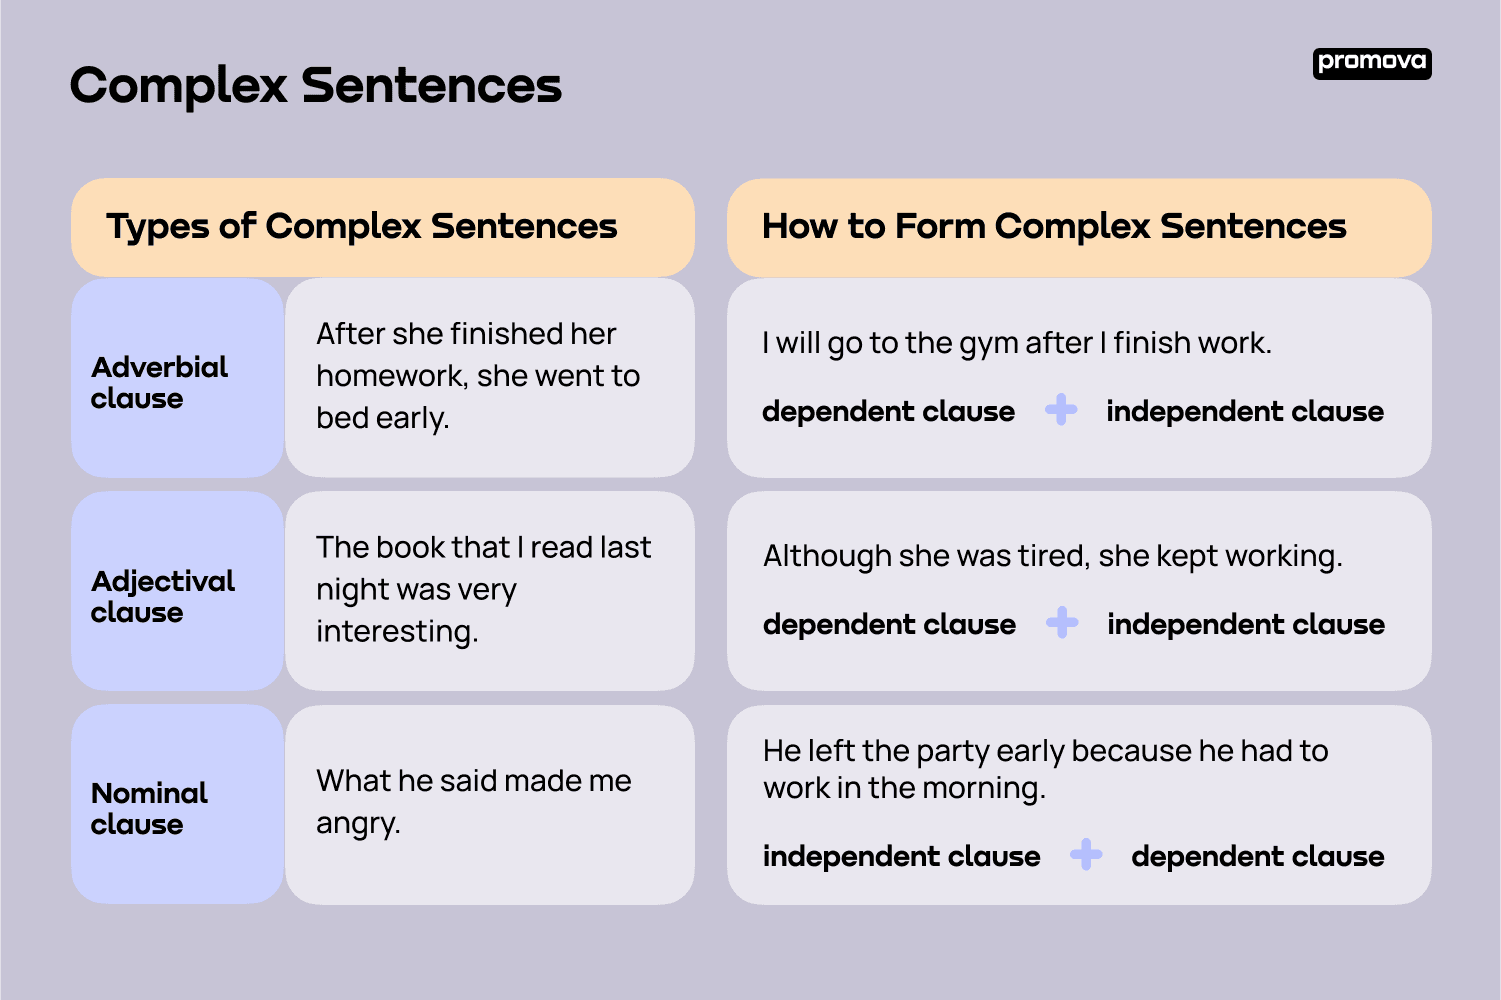 Types of Complex Sentences